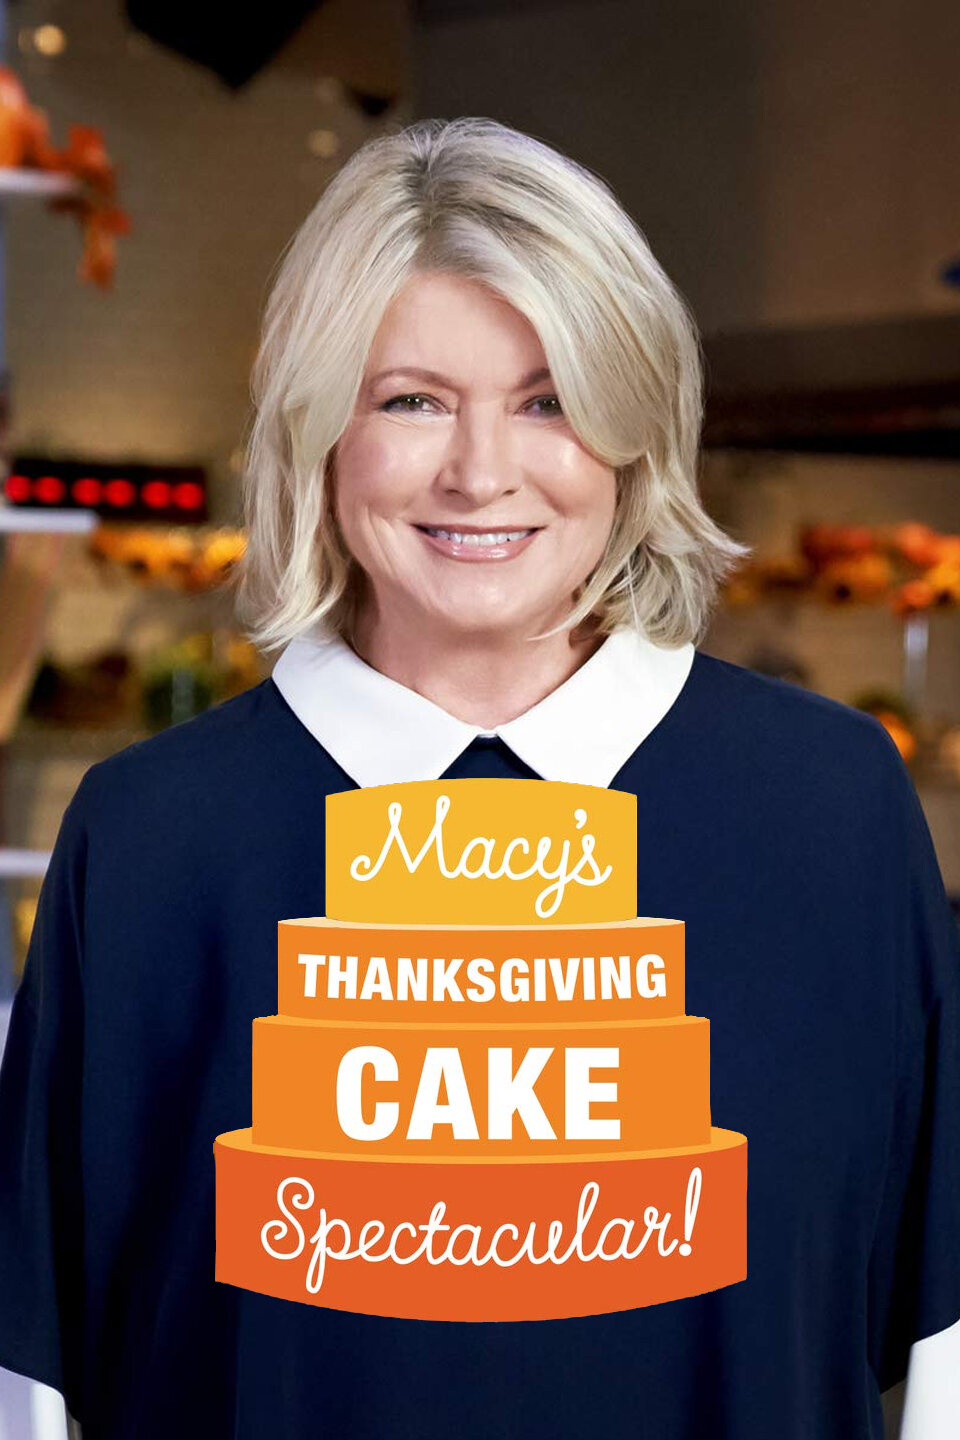 Macy's Thanksgiving Cake Spectacular ne zaman